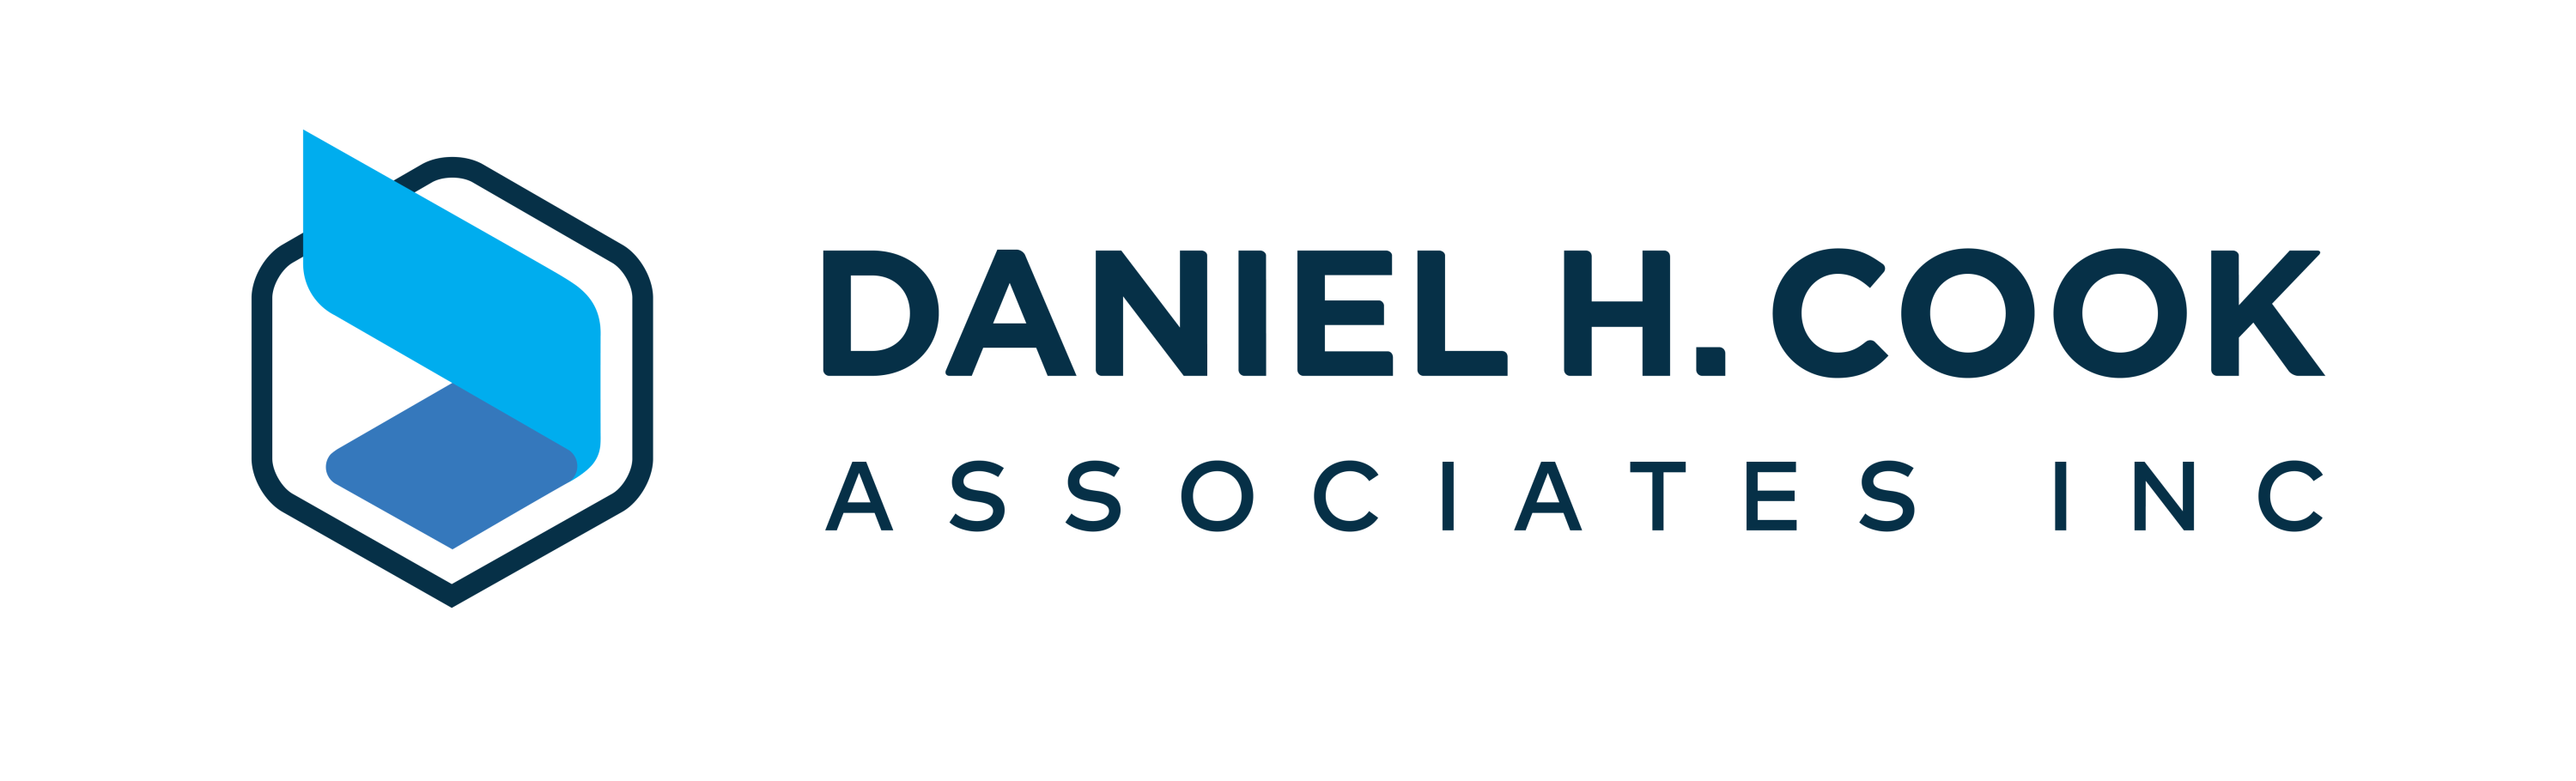 Daniel H Cook Associates, Inc.'s Image